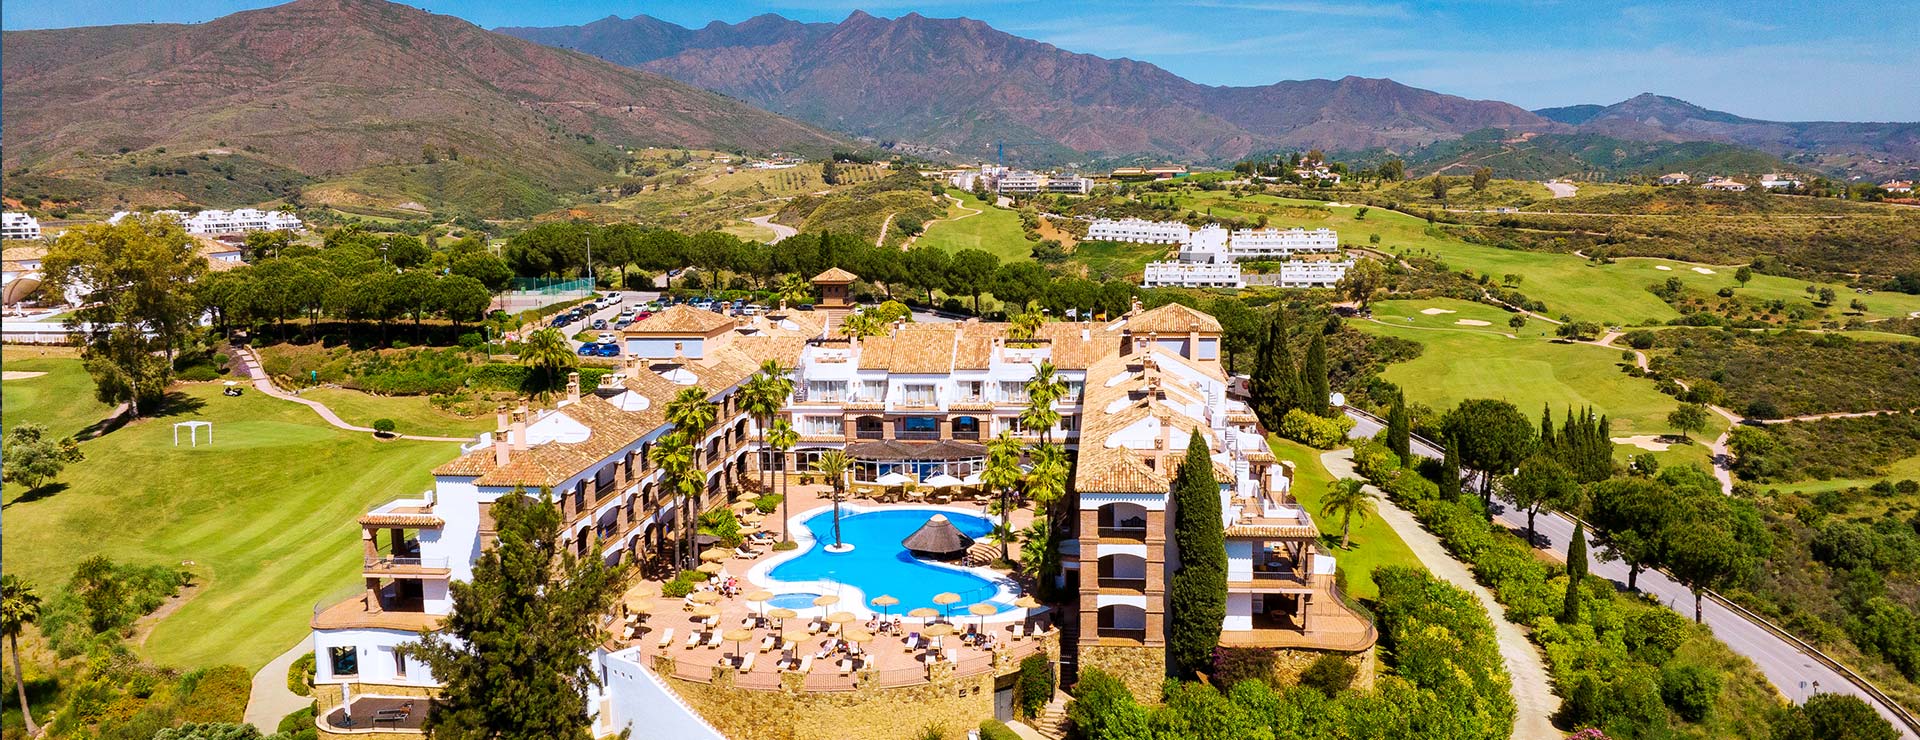 La Cala Resort. Hotel, Spa and Residential in Costa del Sol, Spain.